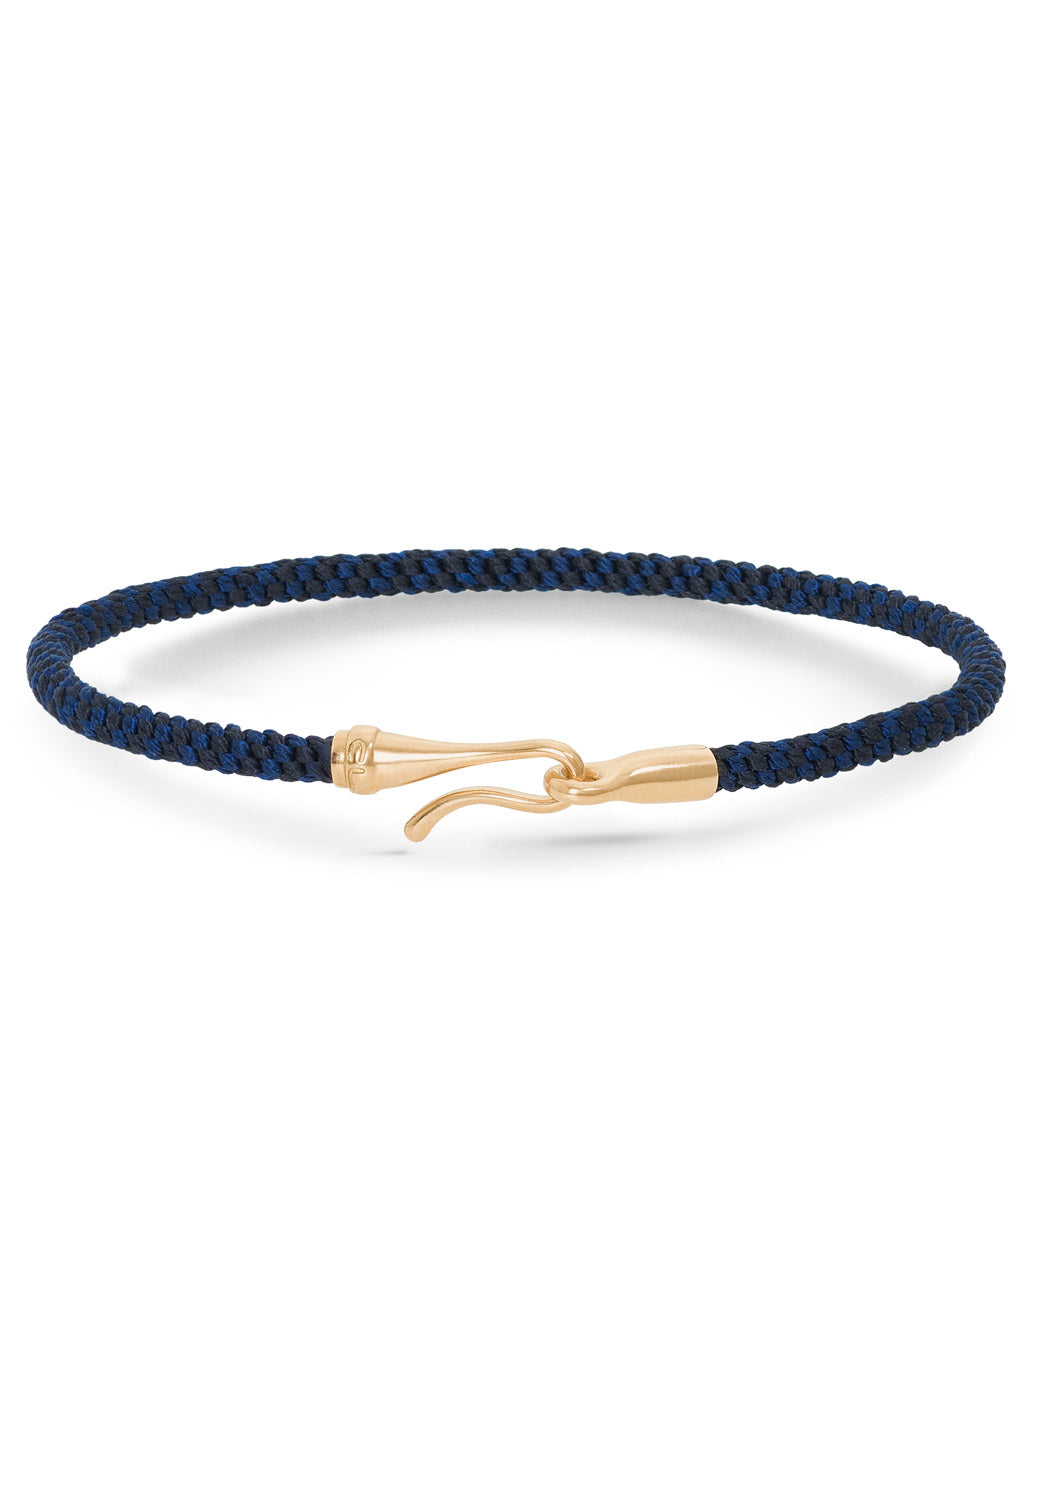 Ole Lynggaard Life 18KYG Midnight Blue Rope Bracelet | Ref. A3040-406 | OsterJewelers.com